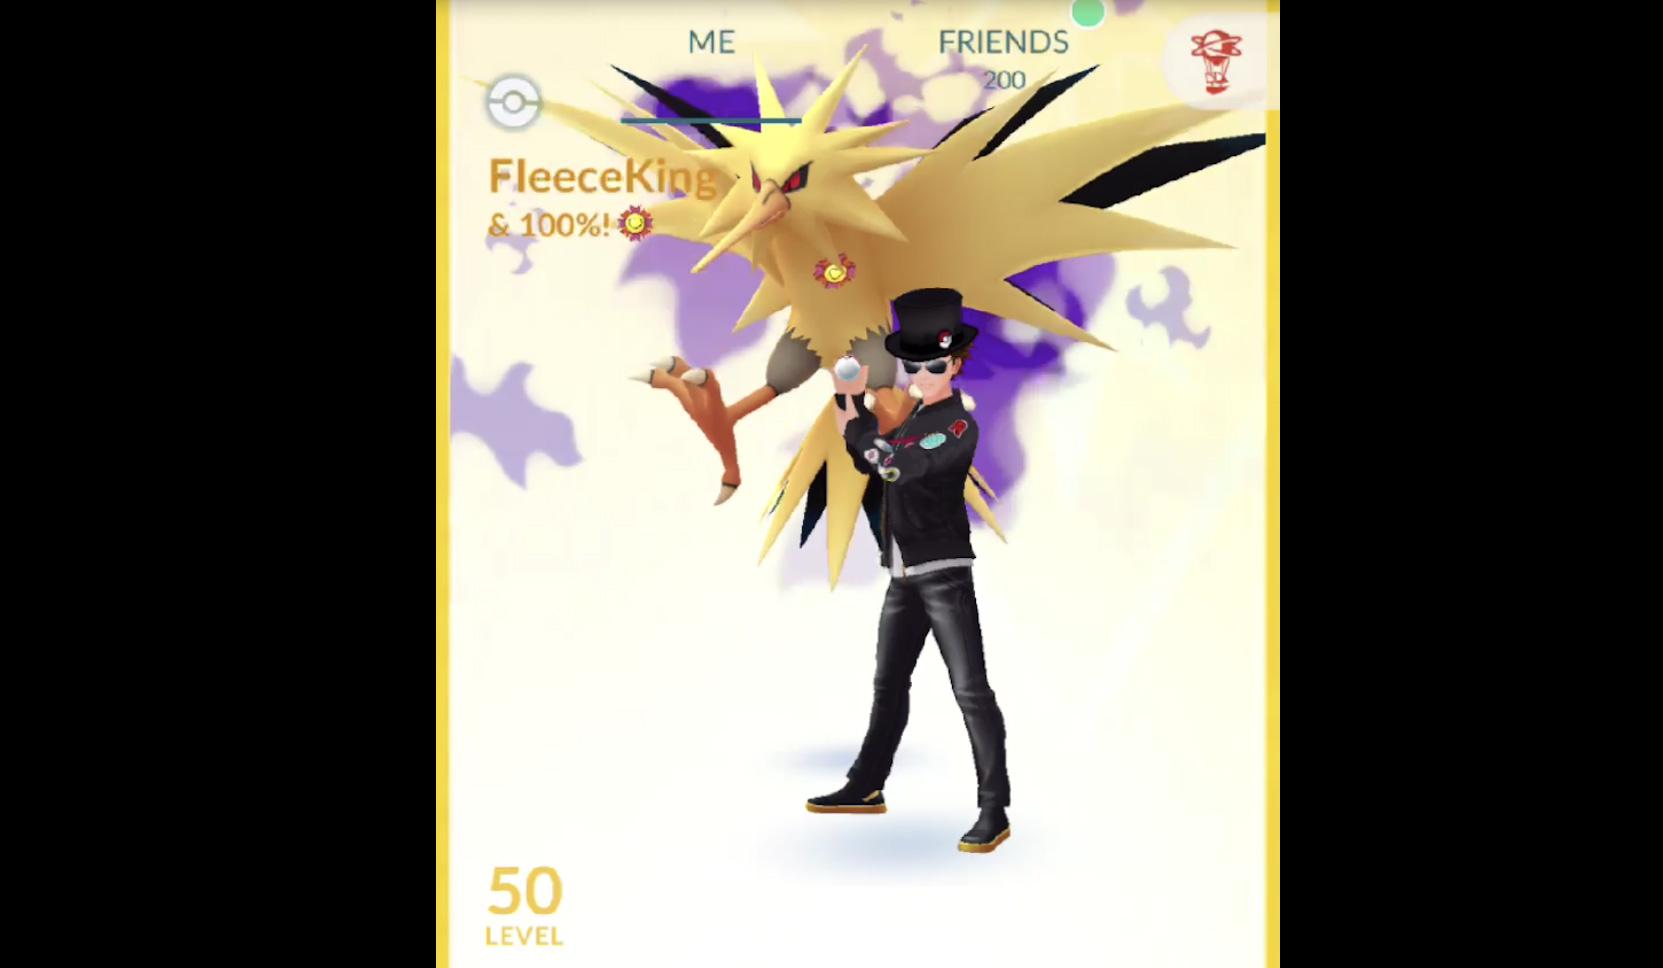 FleeceKing on X: Is Pokémon Go down for anyone else right now